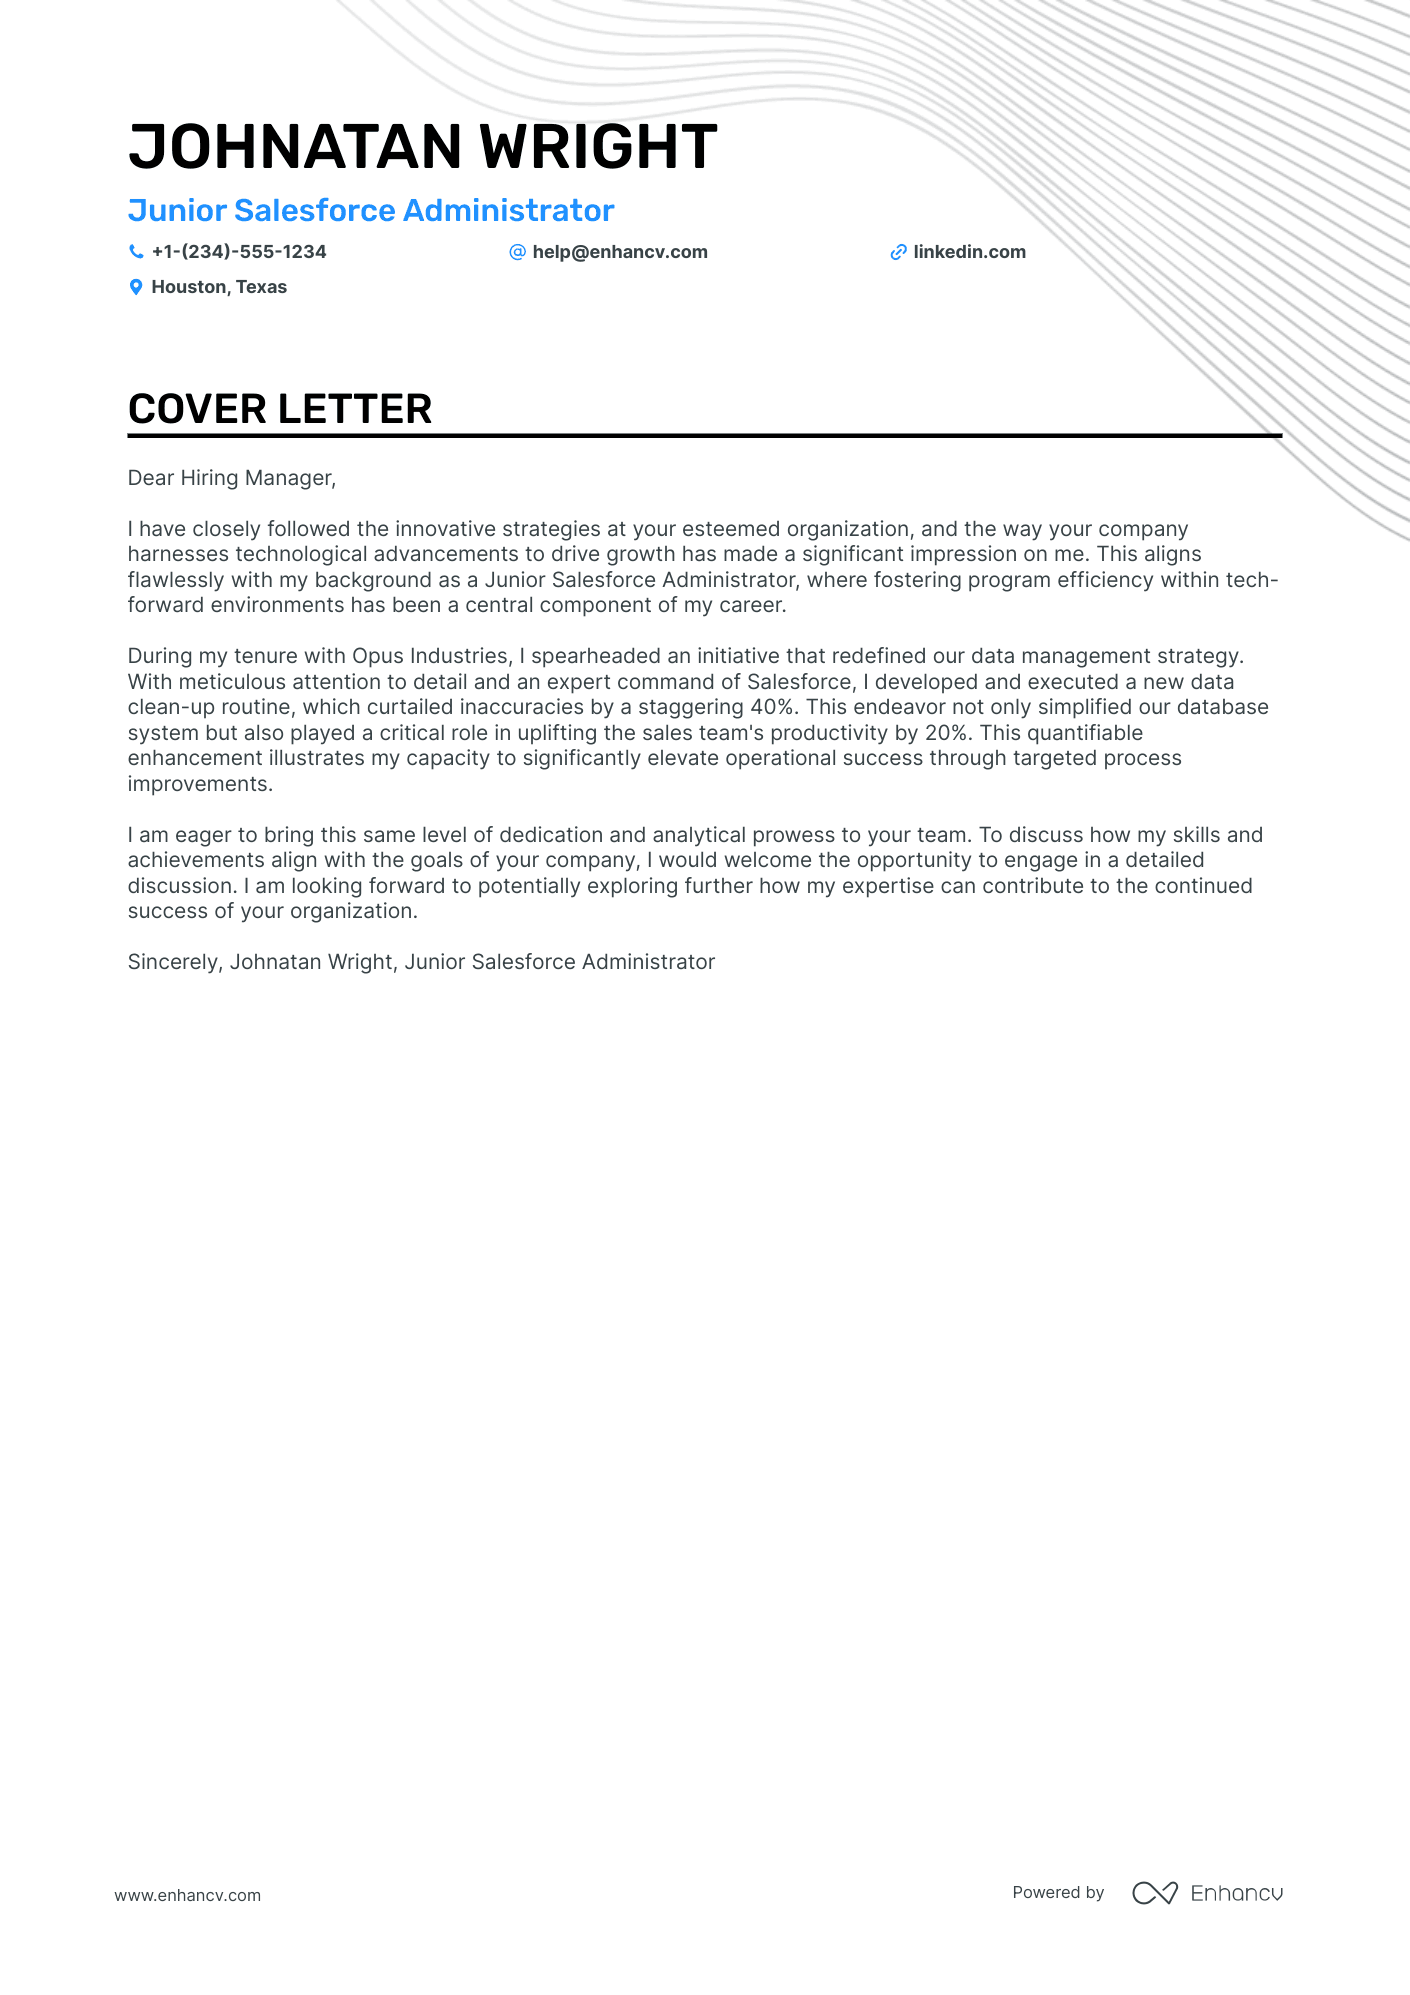 Junior Salesforce Admin cover letter